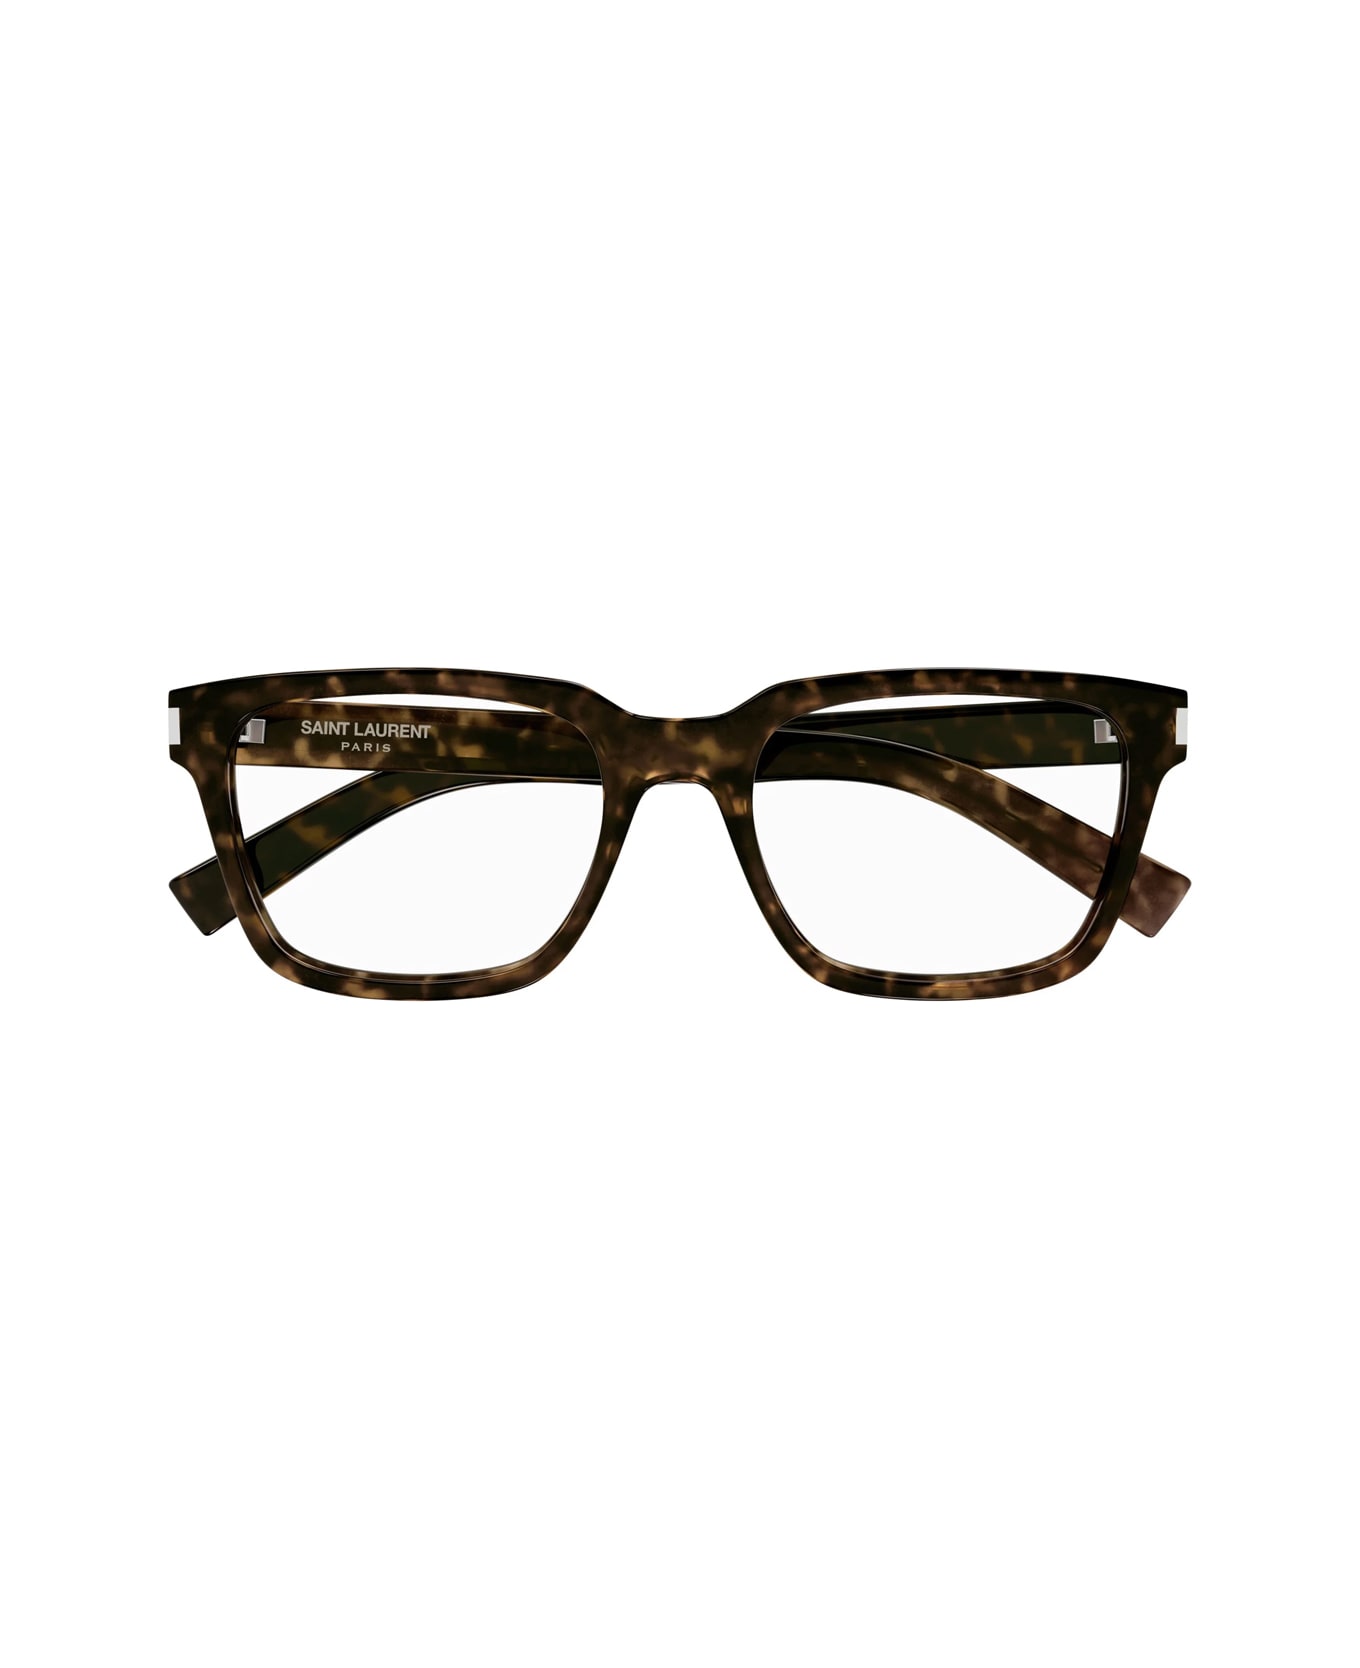 Saint Laurent Eyewear Sl 621 002 Glasses - Marrone アイウェア